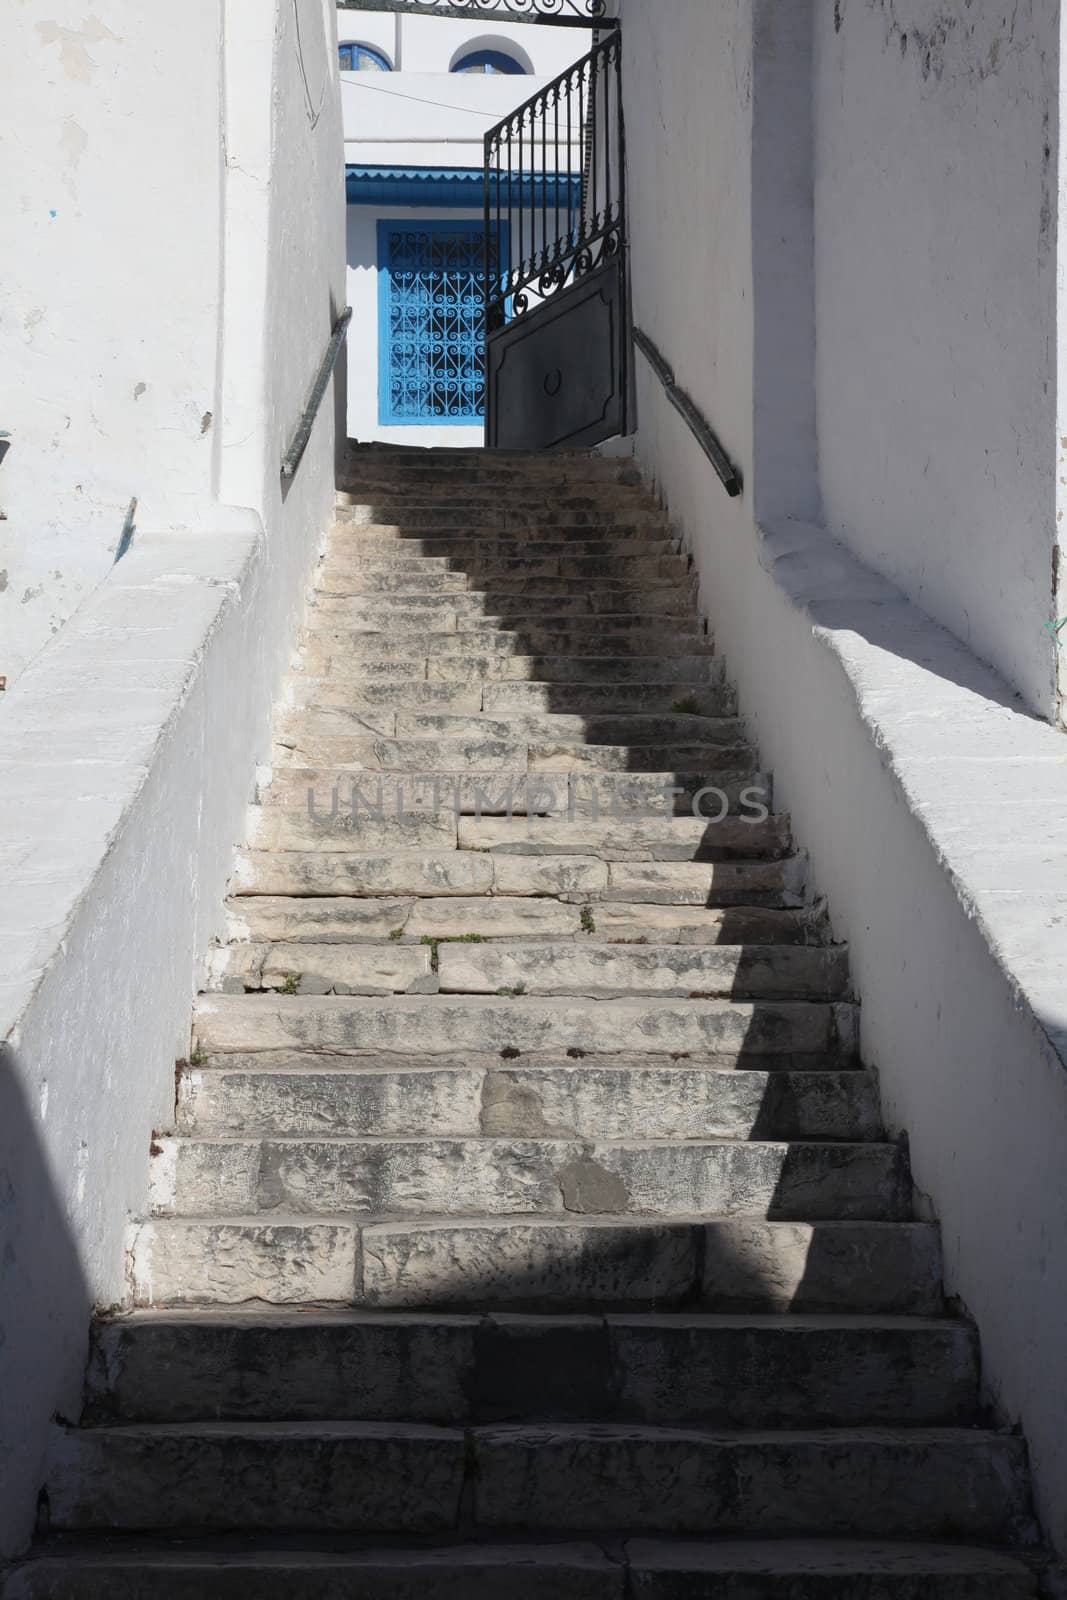 Stairway in Sidi Bou Said, Tunisia by atlas